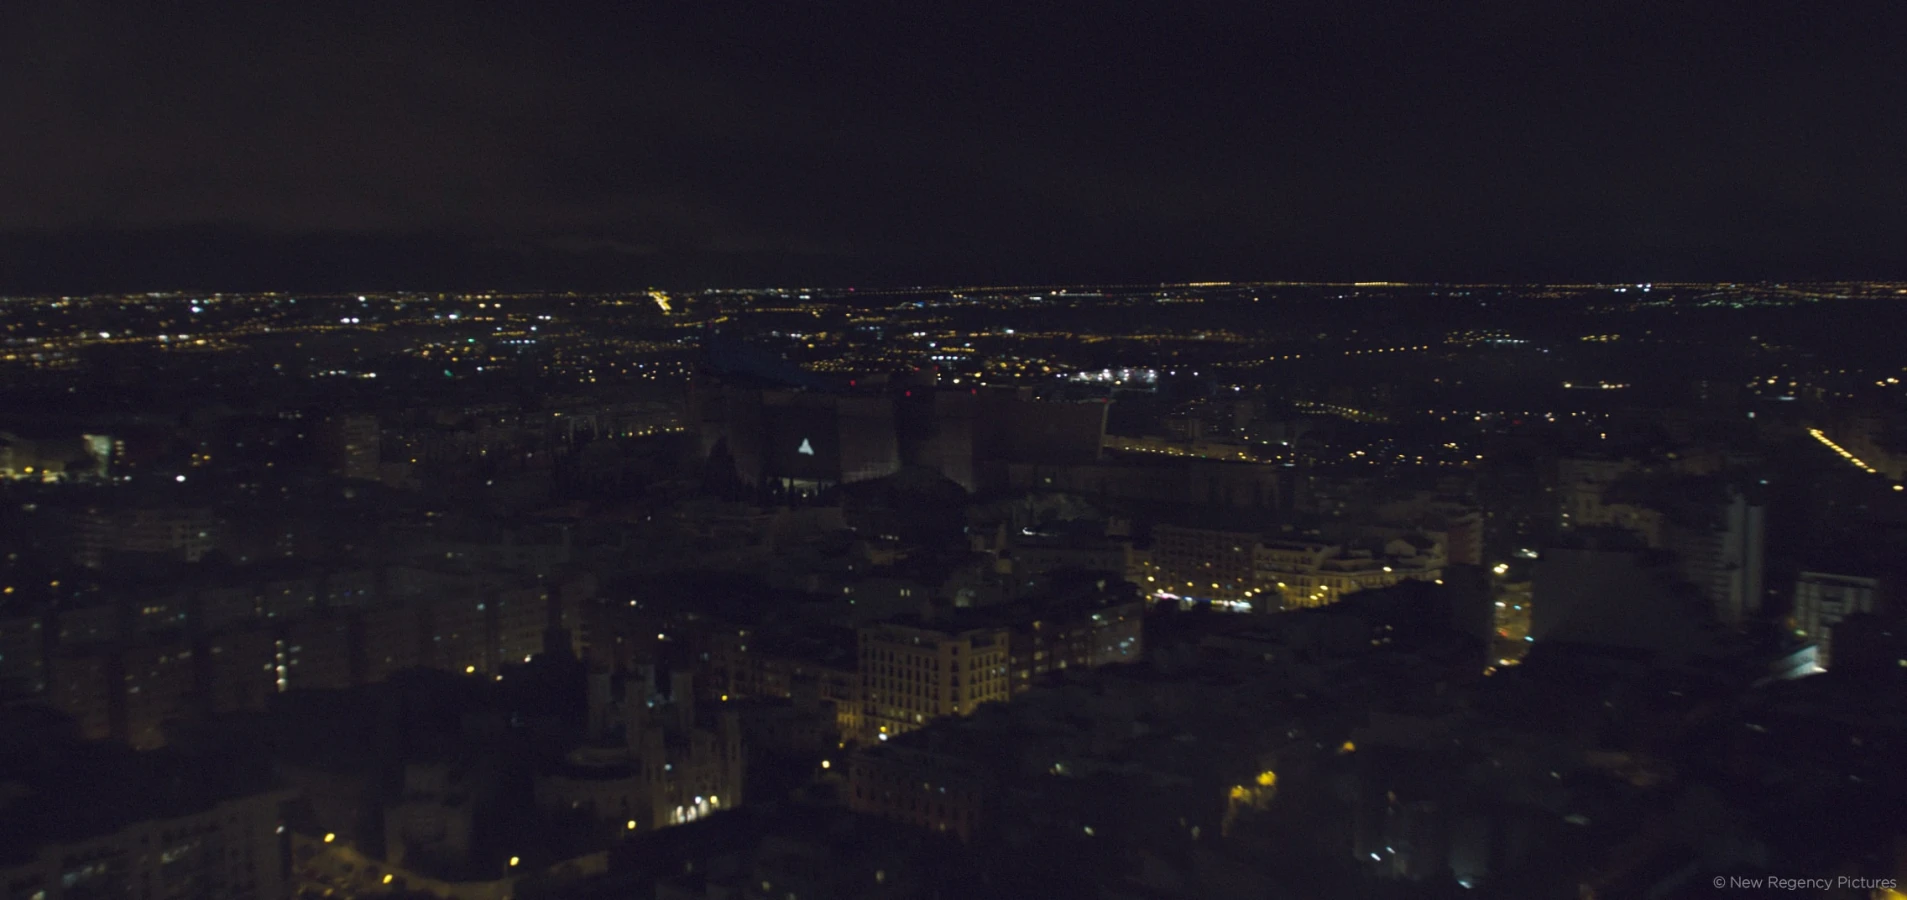  Assassins's Creed shot view city night Raynault vfx 